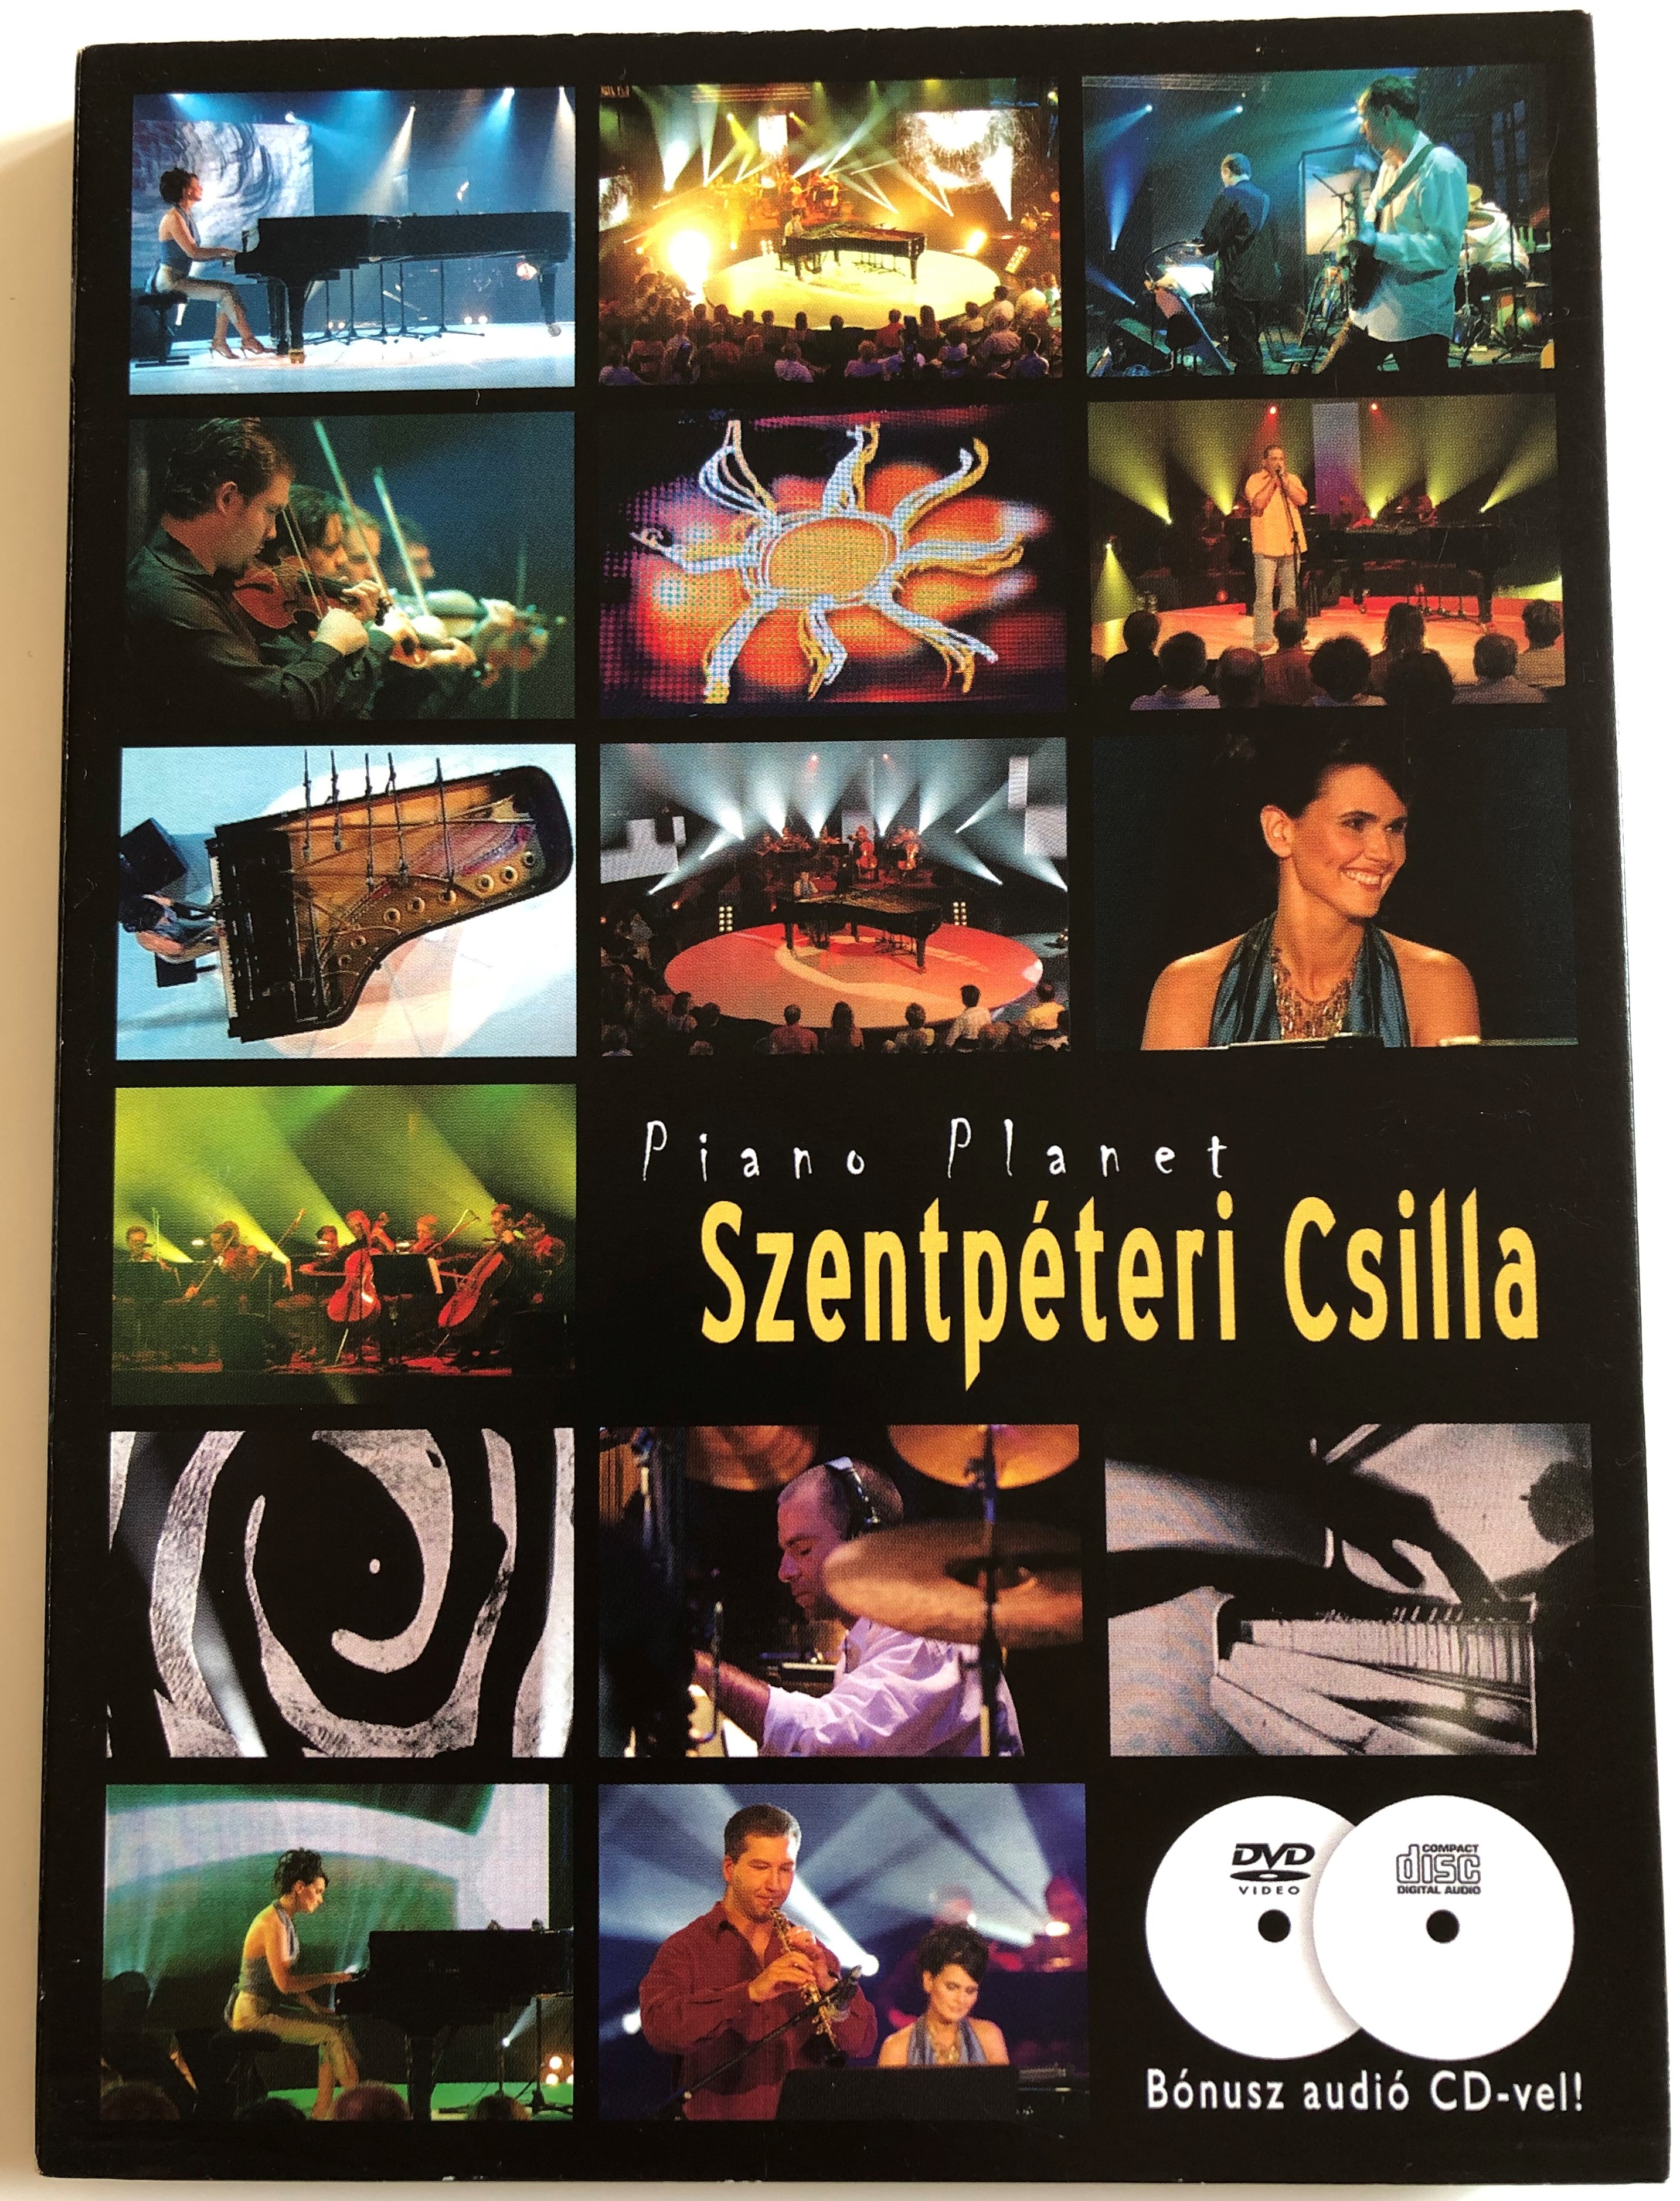  Piano Planet - Szentpéteri Csilla DVD&Audio CD 1.JPG